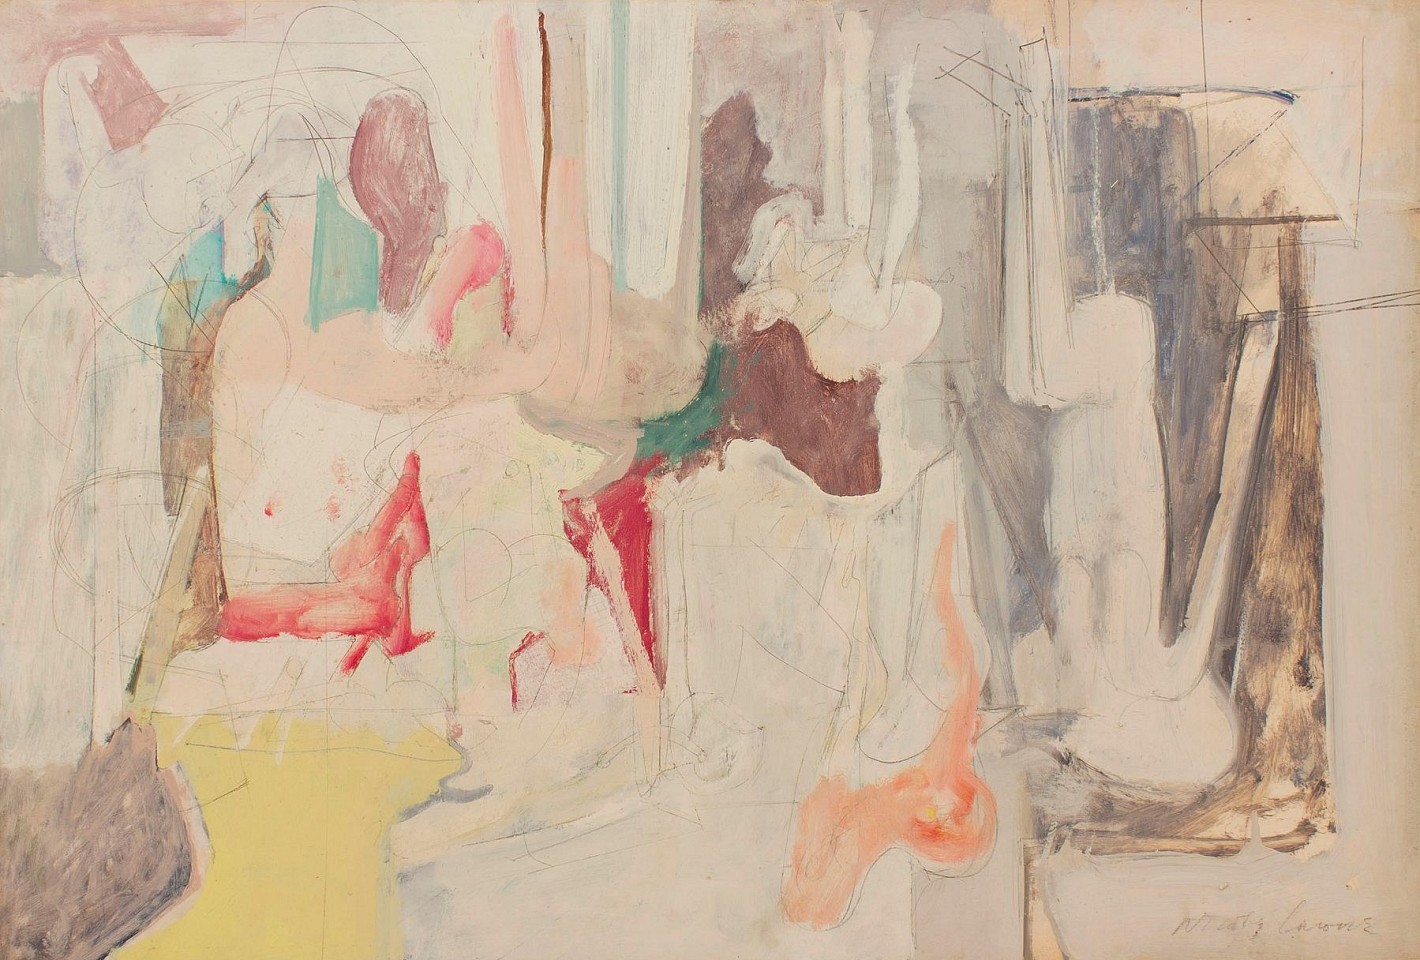 Nicholas Carone, Untitled (W-1383-S), 1966
oil and pencil on board, 28 x 41 1/4 in. (71.1 x 104.8 cm)
NC161004